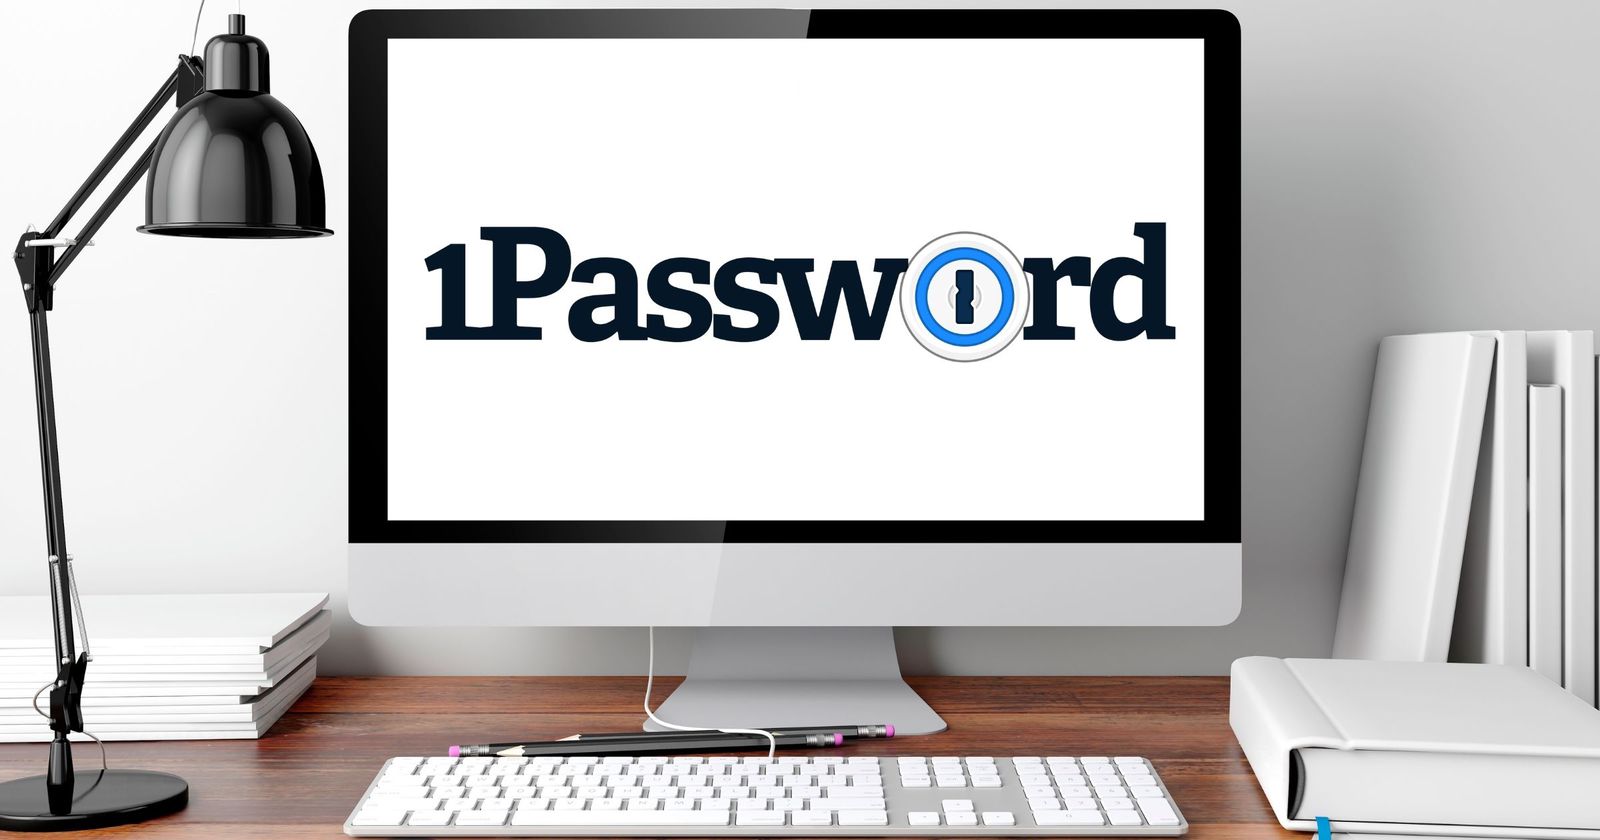 1password business account